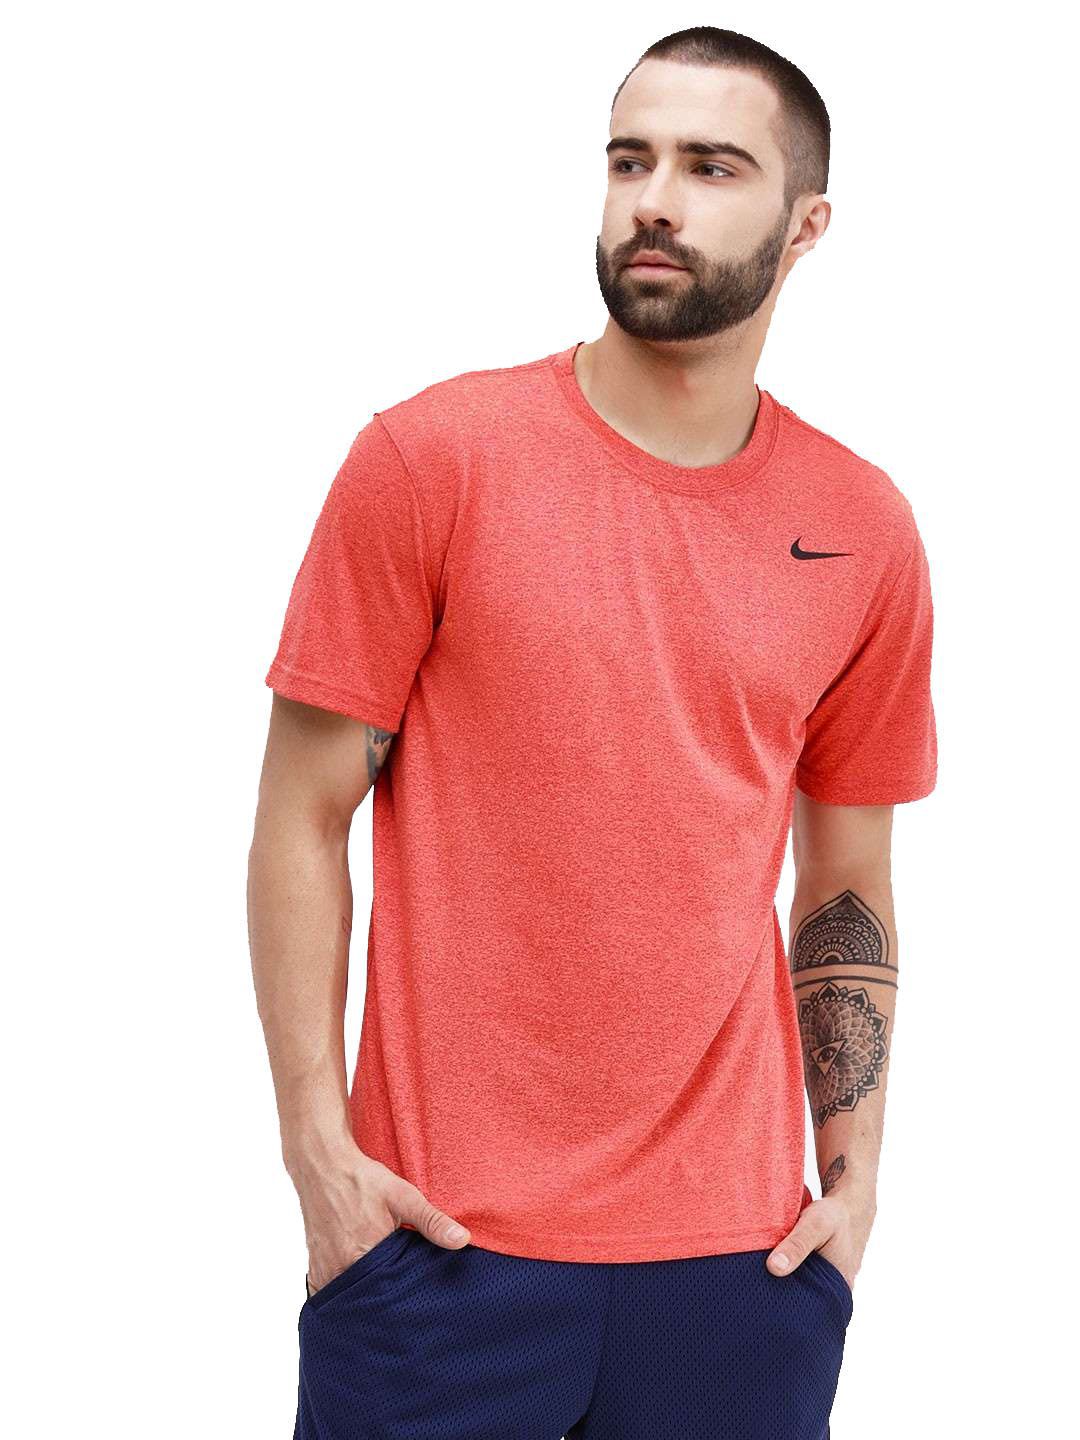 dri fit Orange Polyester T-Shirt - Buy nike dri fit Orange Polyester T-Shirt at Best Prices in India on Snapdeal